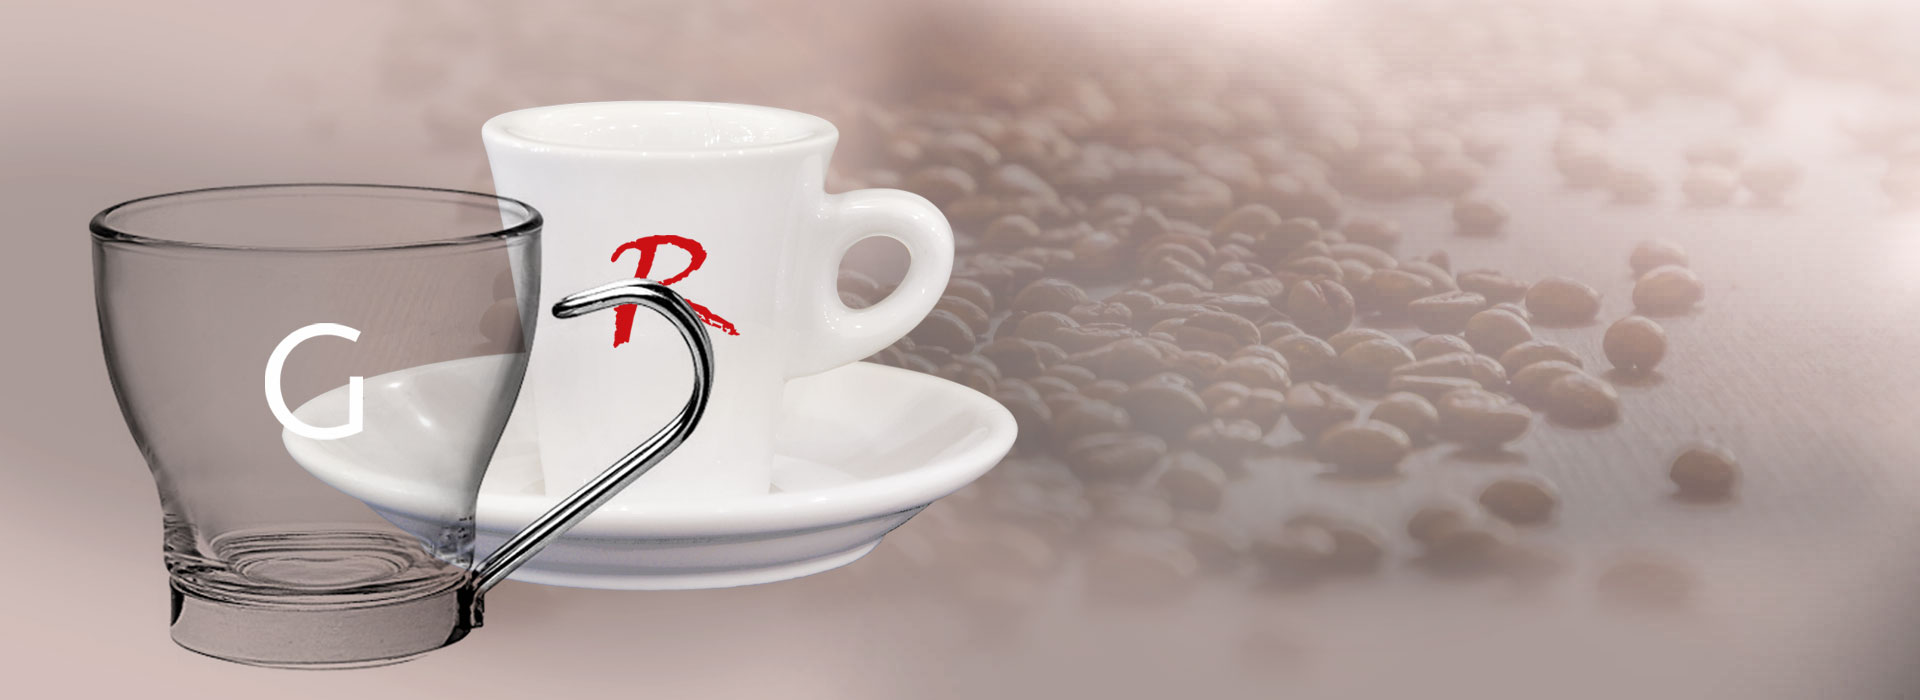 tazas de cafe personalizadas - banner